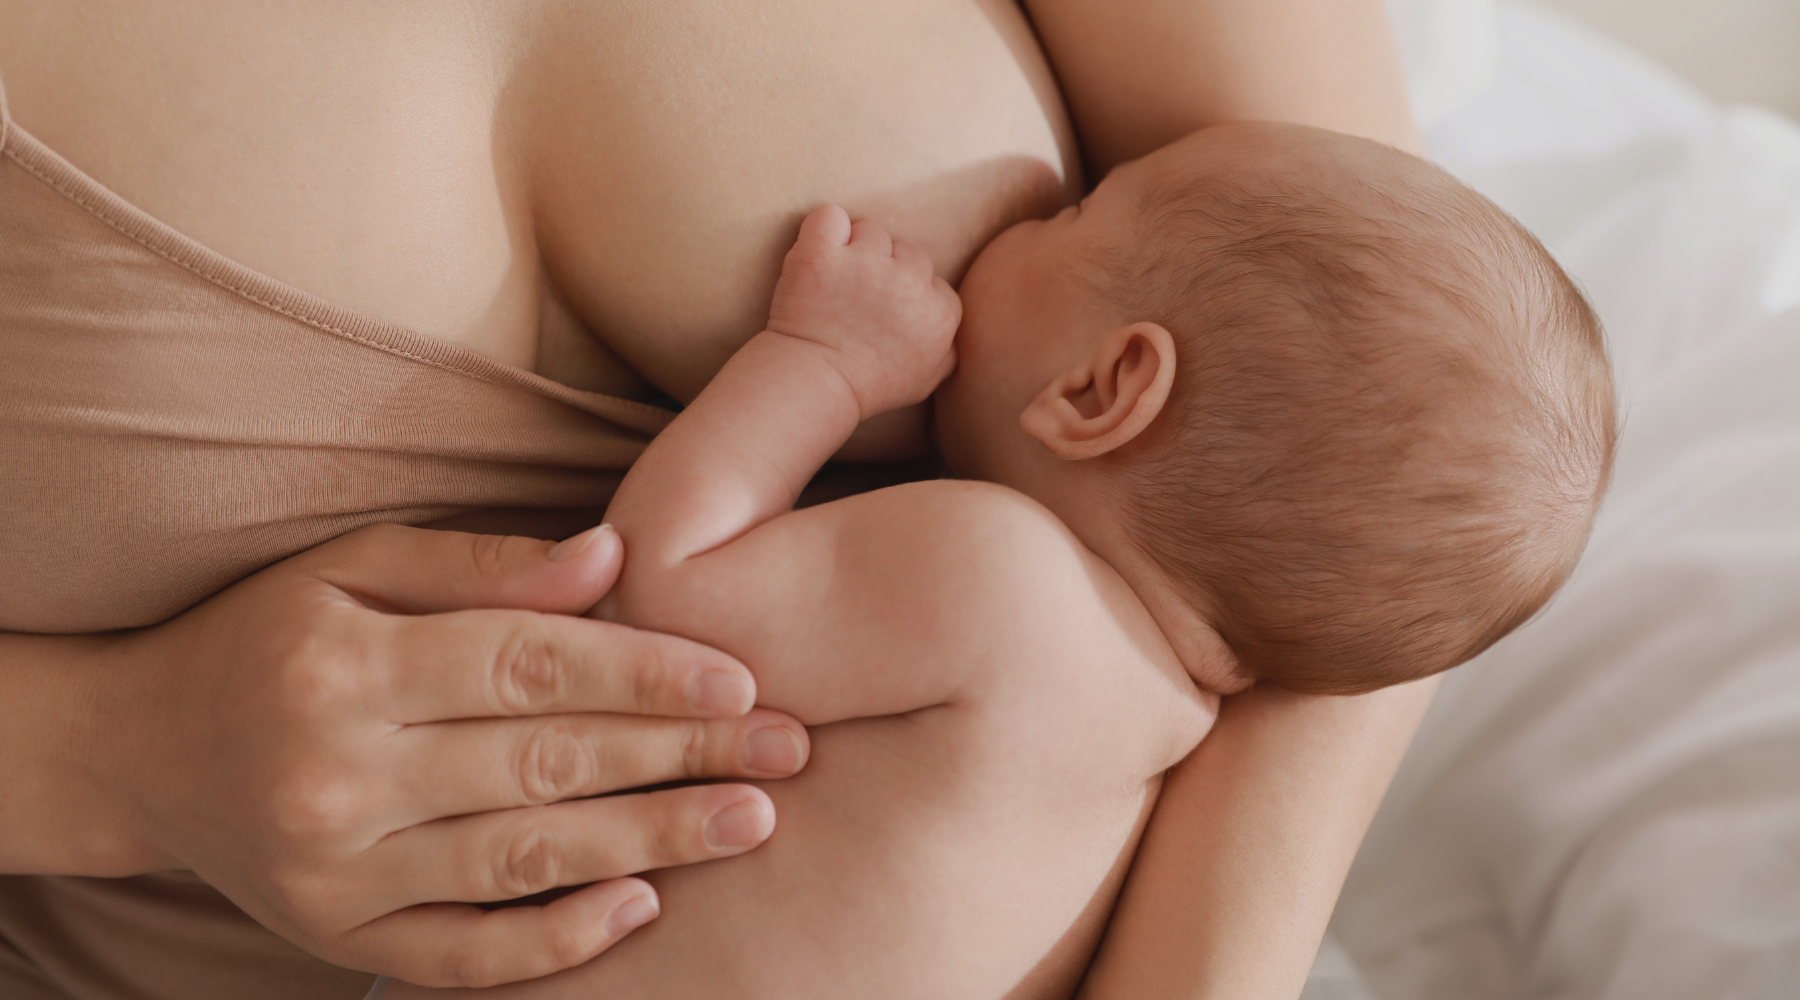 Breastfeeding Awareness